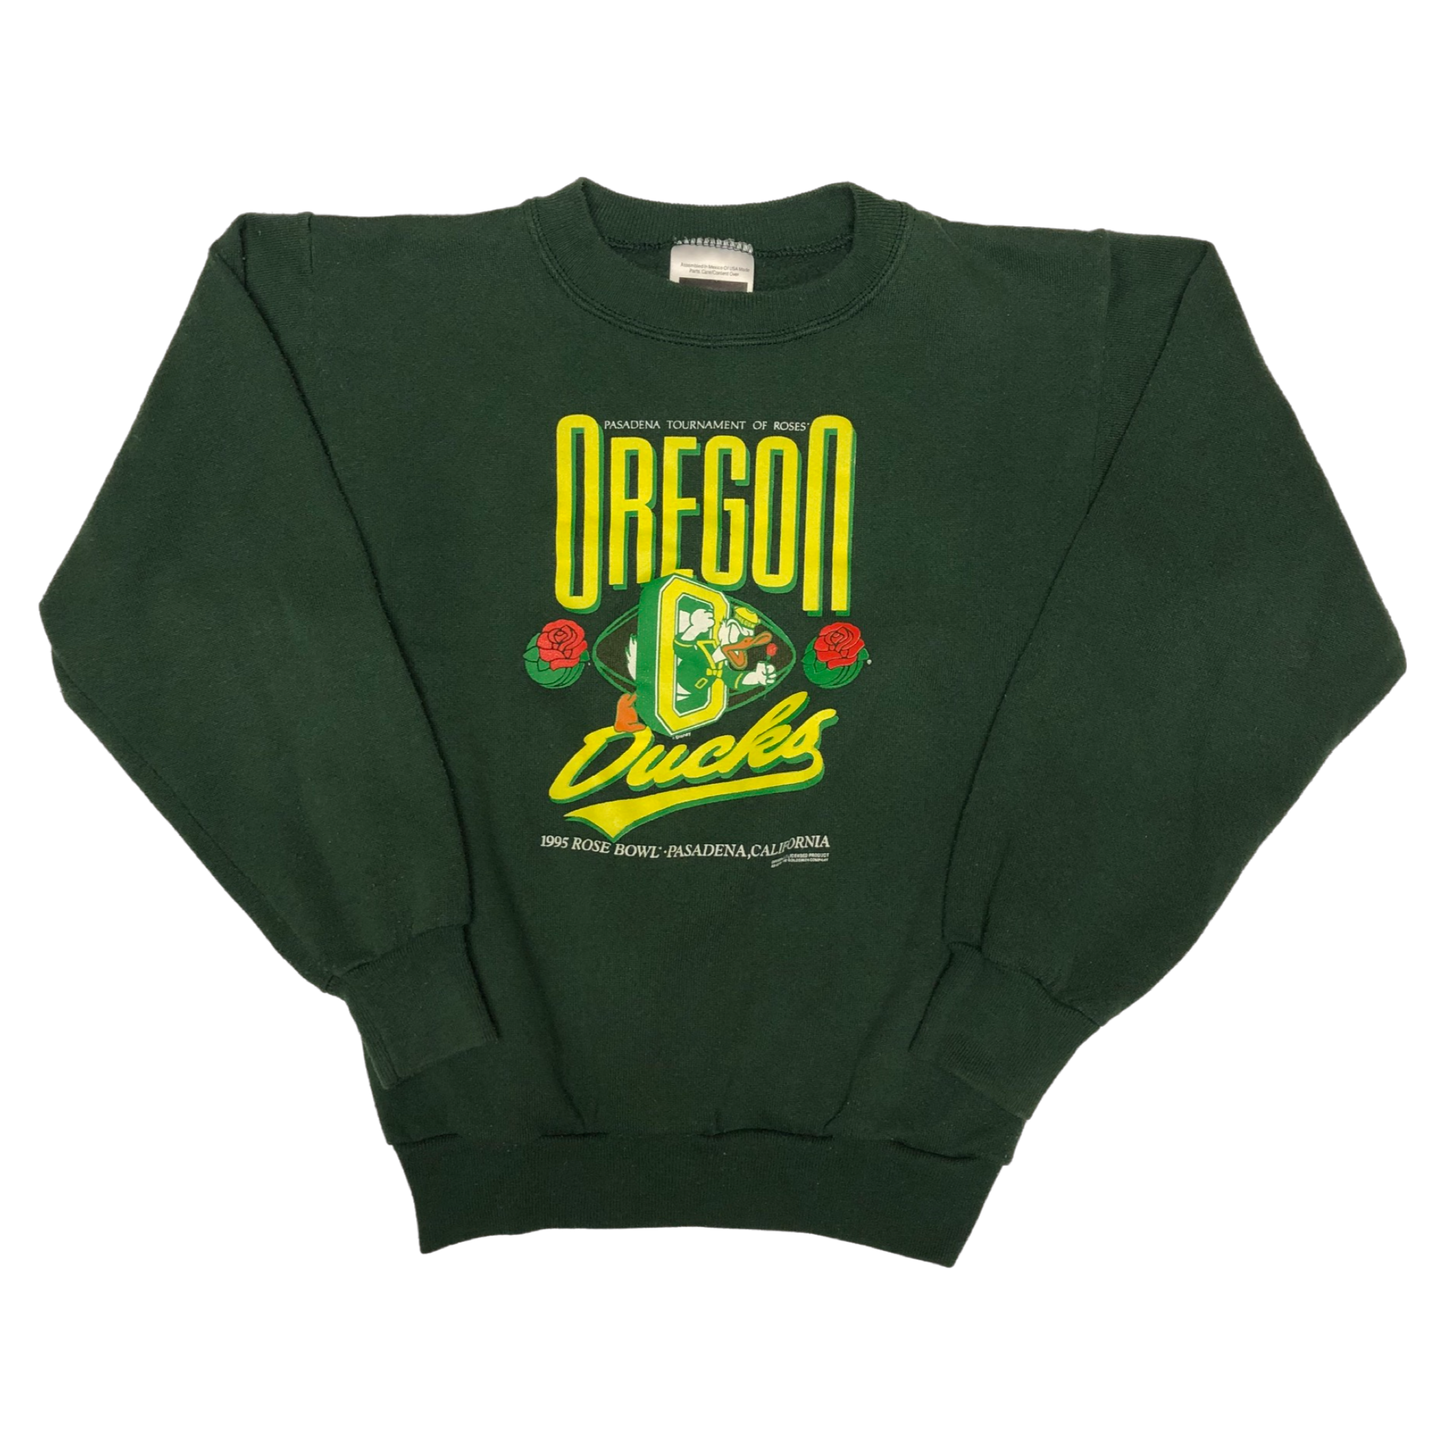 '95 Oregon Ducks Rose Bowl Crewneck